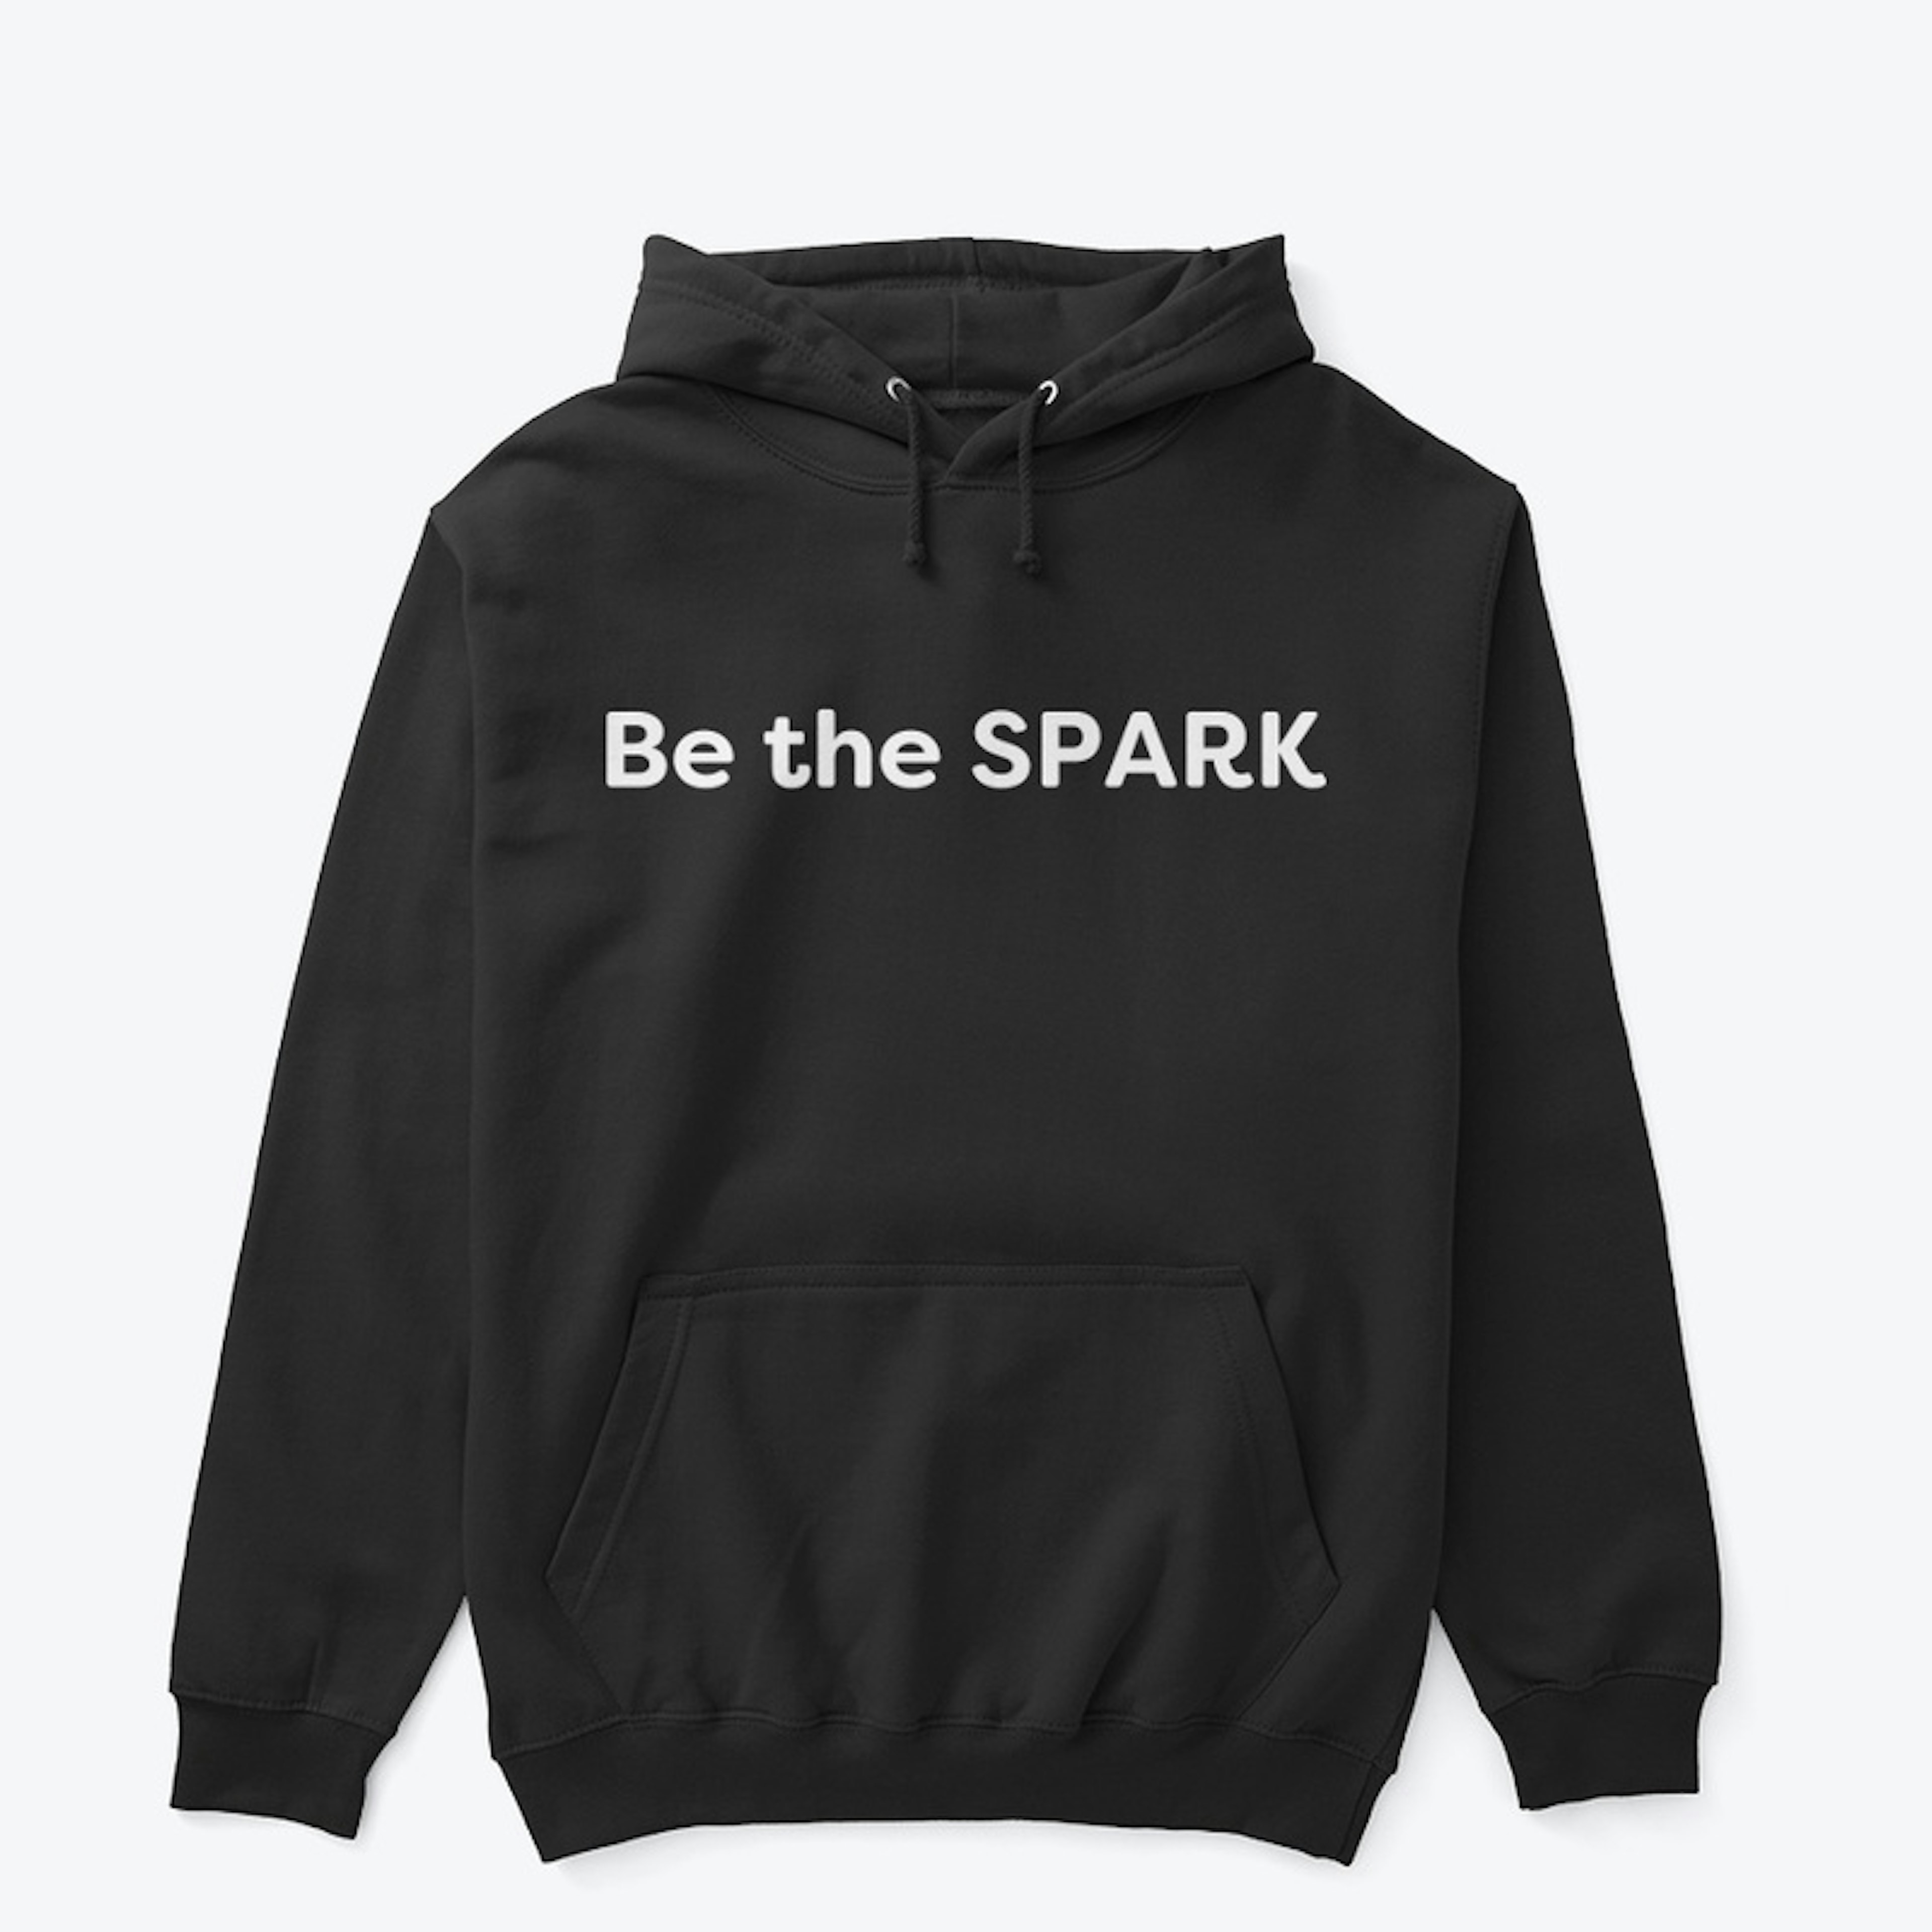 "Be the SPARK" Hoodie